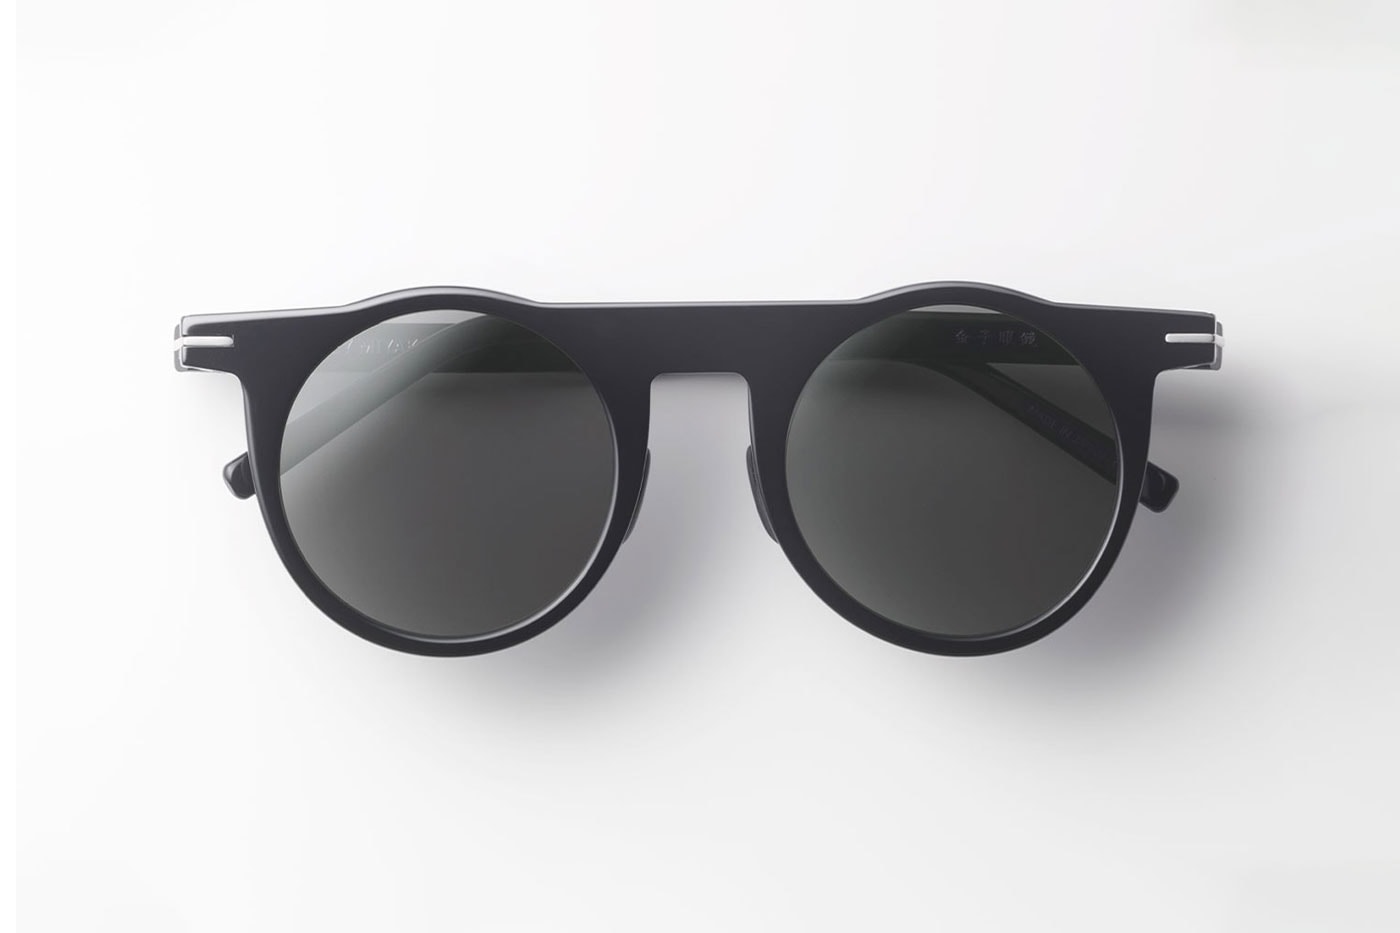 Issey Miyake Eyes geometry Sunglasses circular rectangular boston round july 15 release info date price